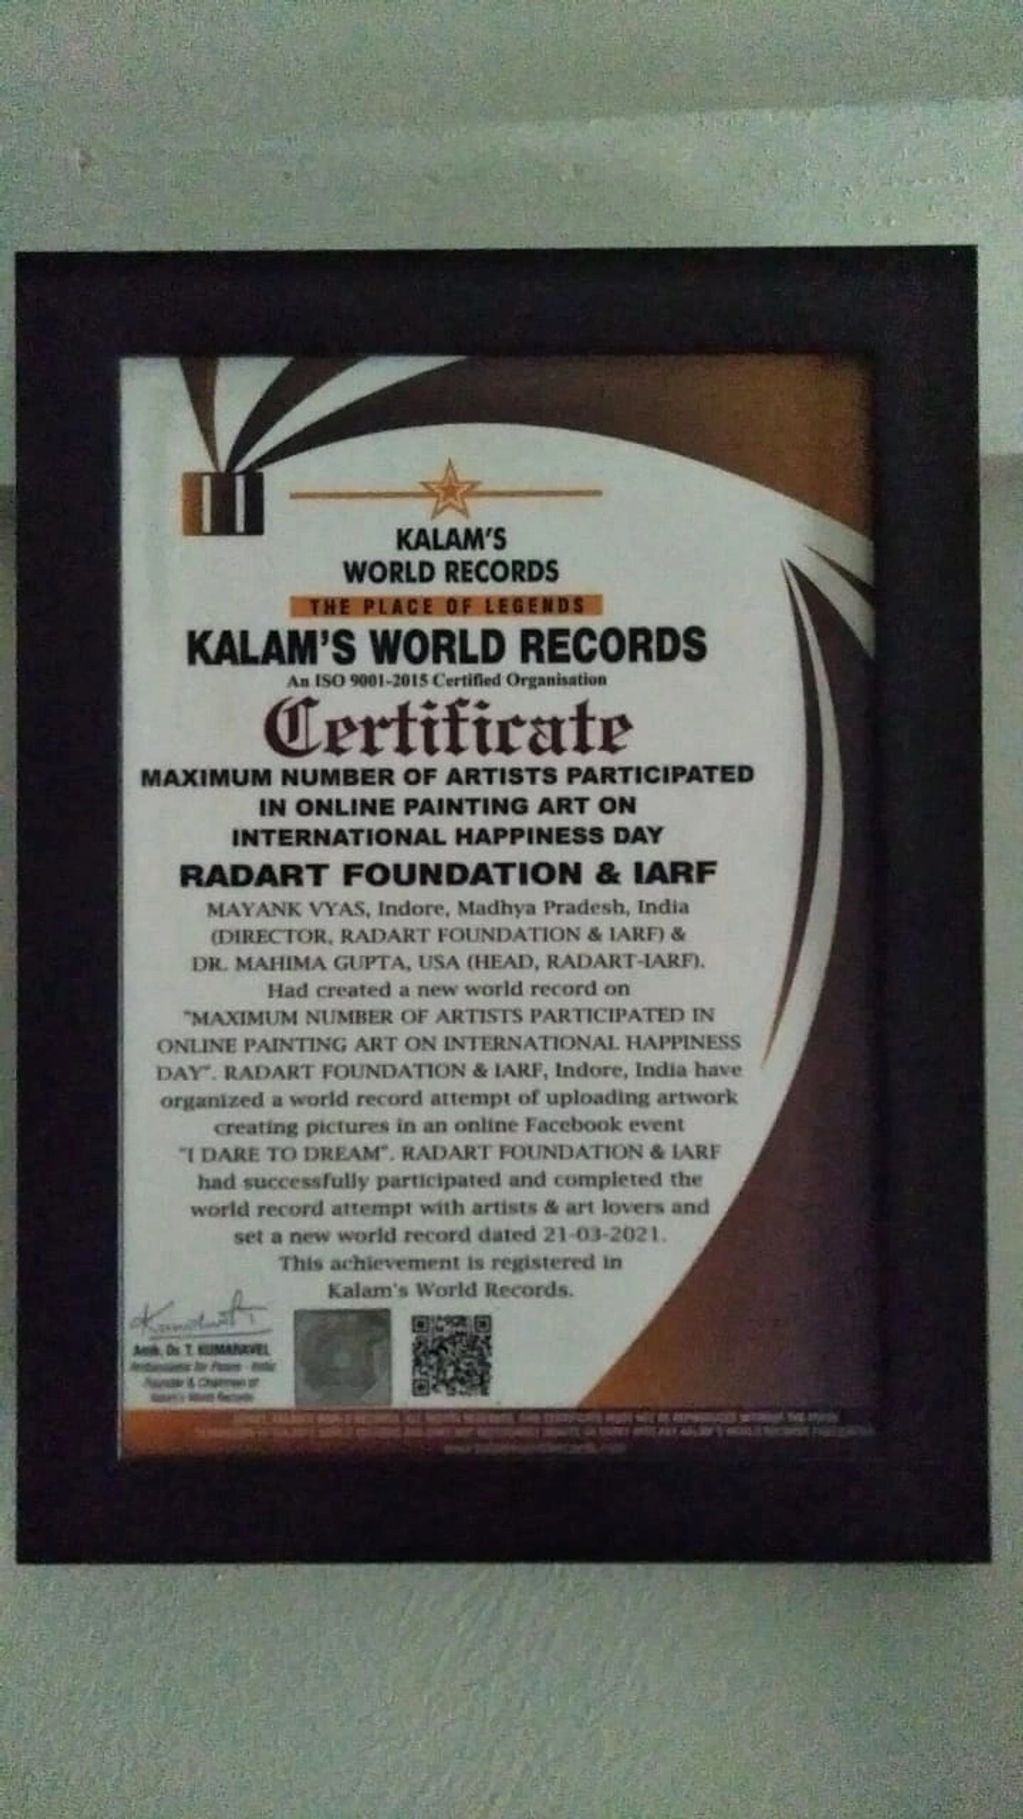 Kalam's World Record Created by Mayank Vyas, Radart Foundation & IARF, Indore, MP - INDIA.